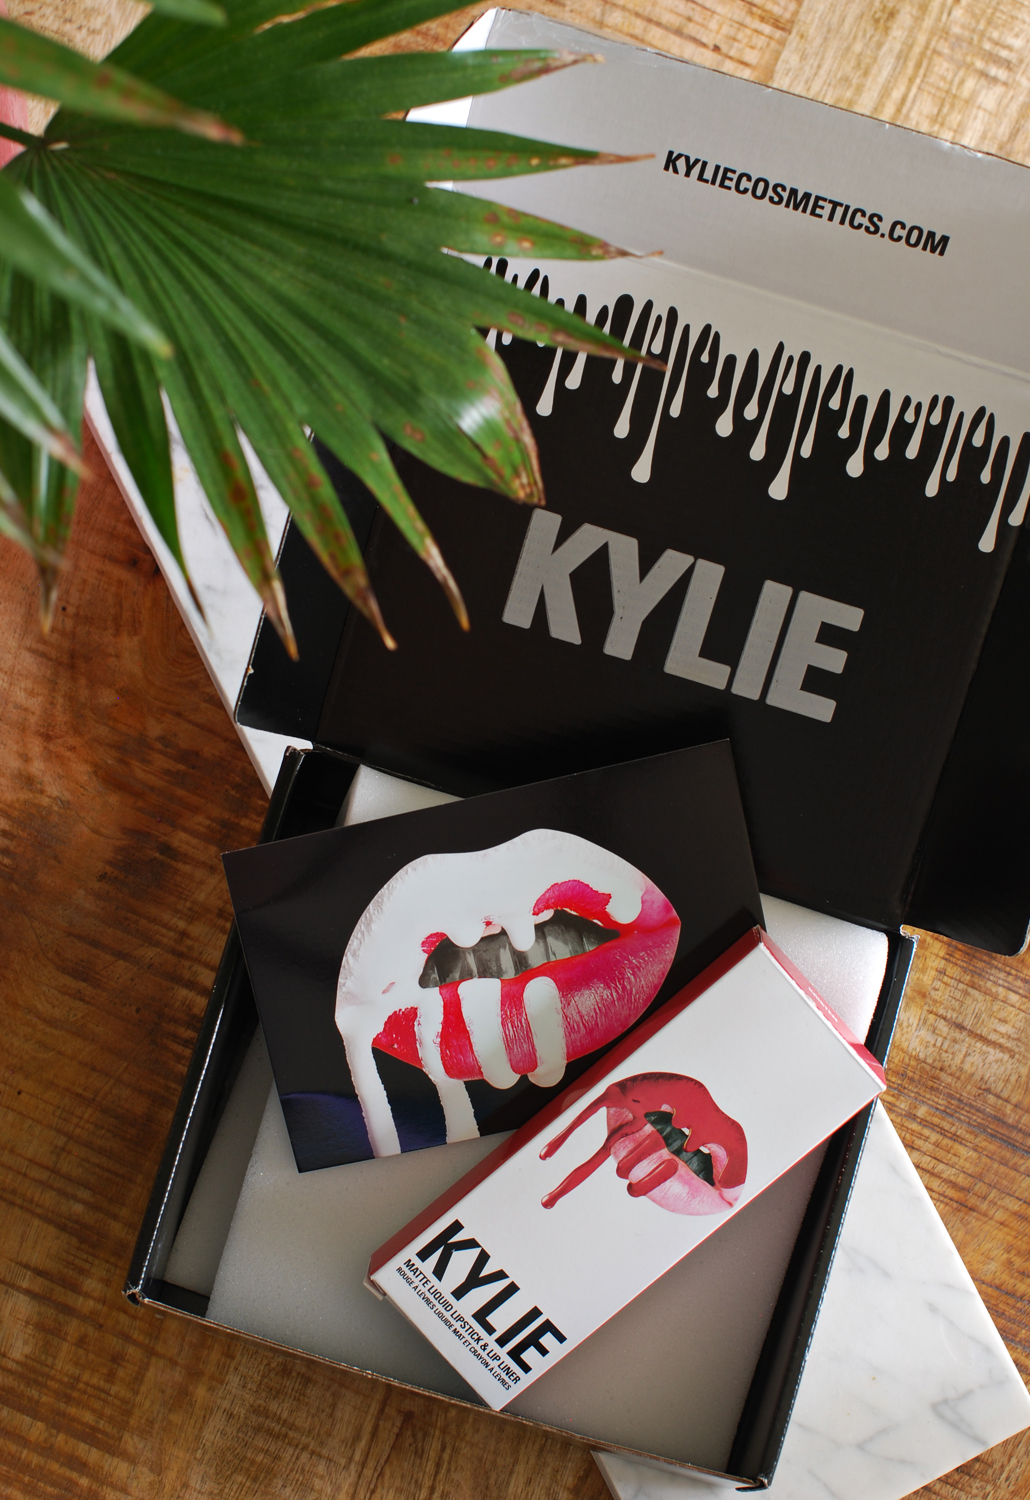 Kylie cosmetics matte liquid lipstick Kristen lip kit